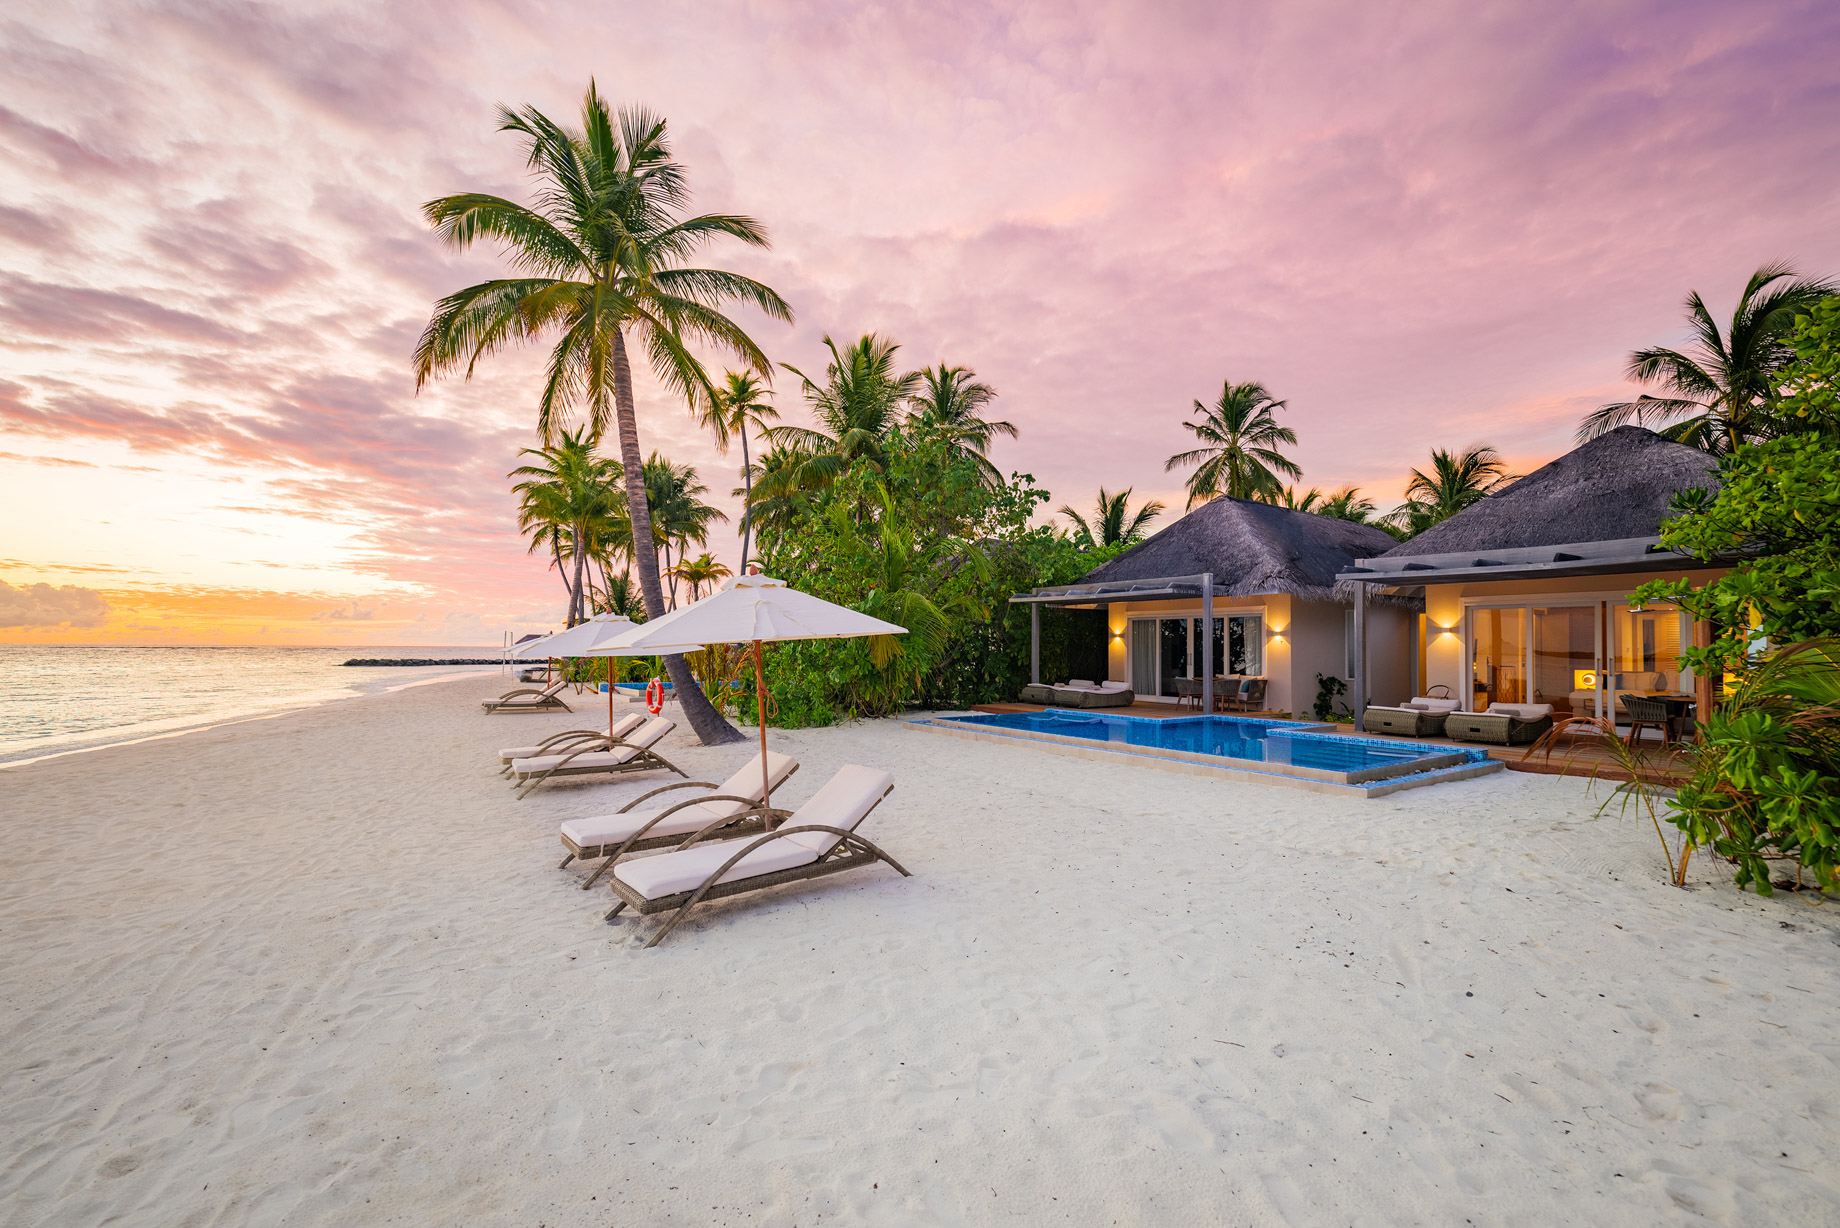 Baglioni Resort Maldives – Maagau Island, Rinbudhoo, Maldives – Beach Villas Ocean View Sunset